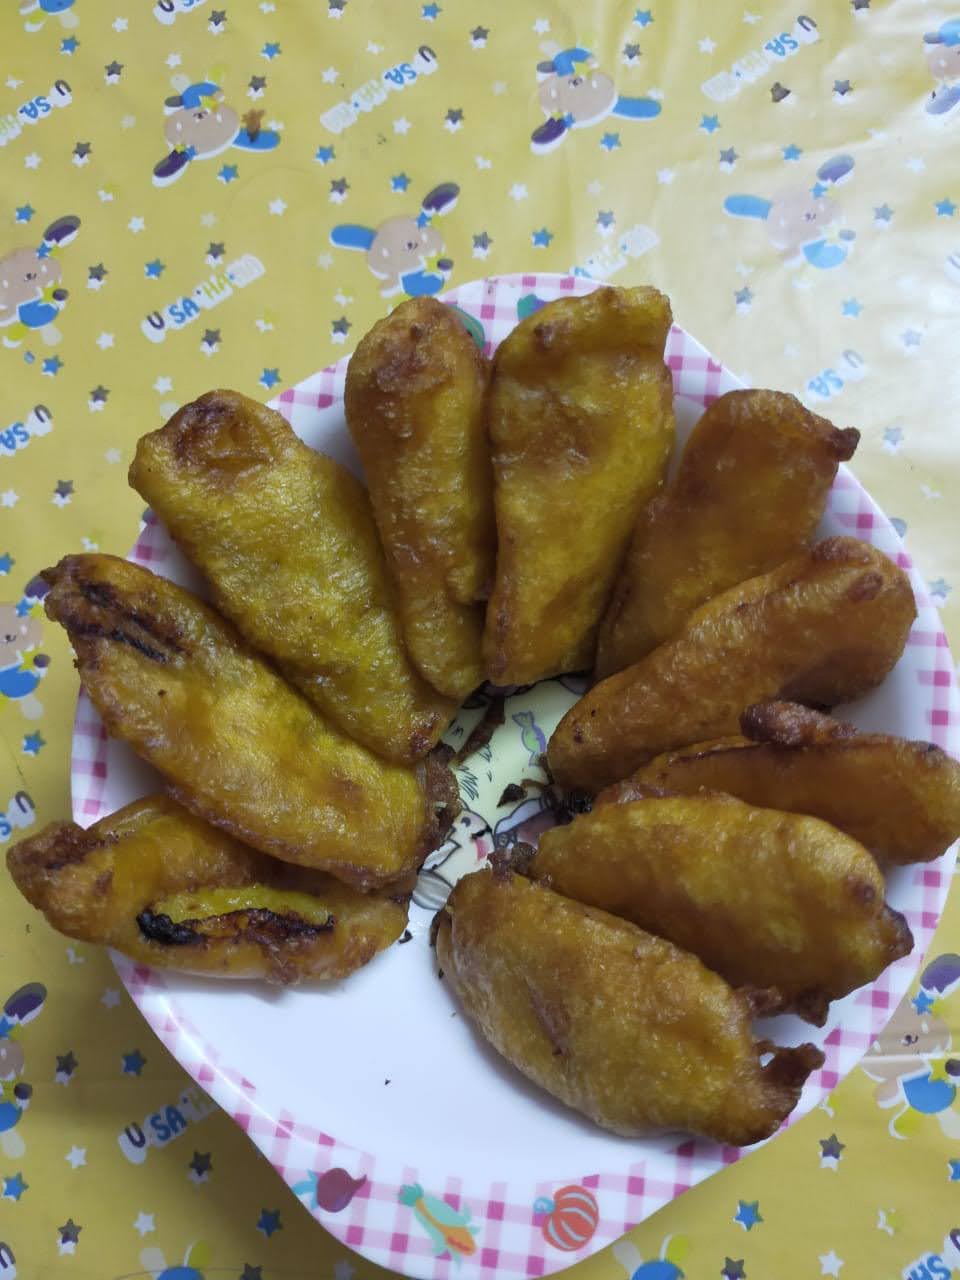 Banana bhaji